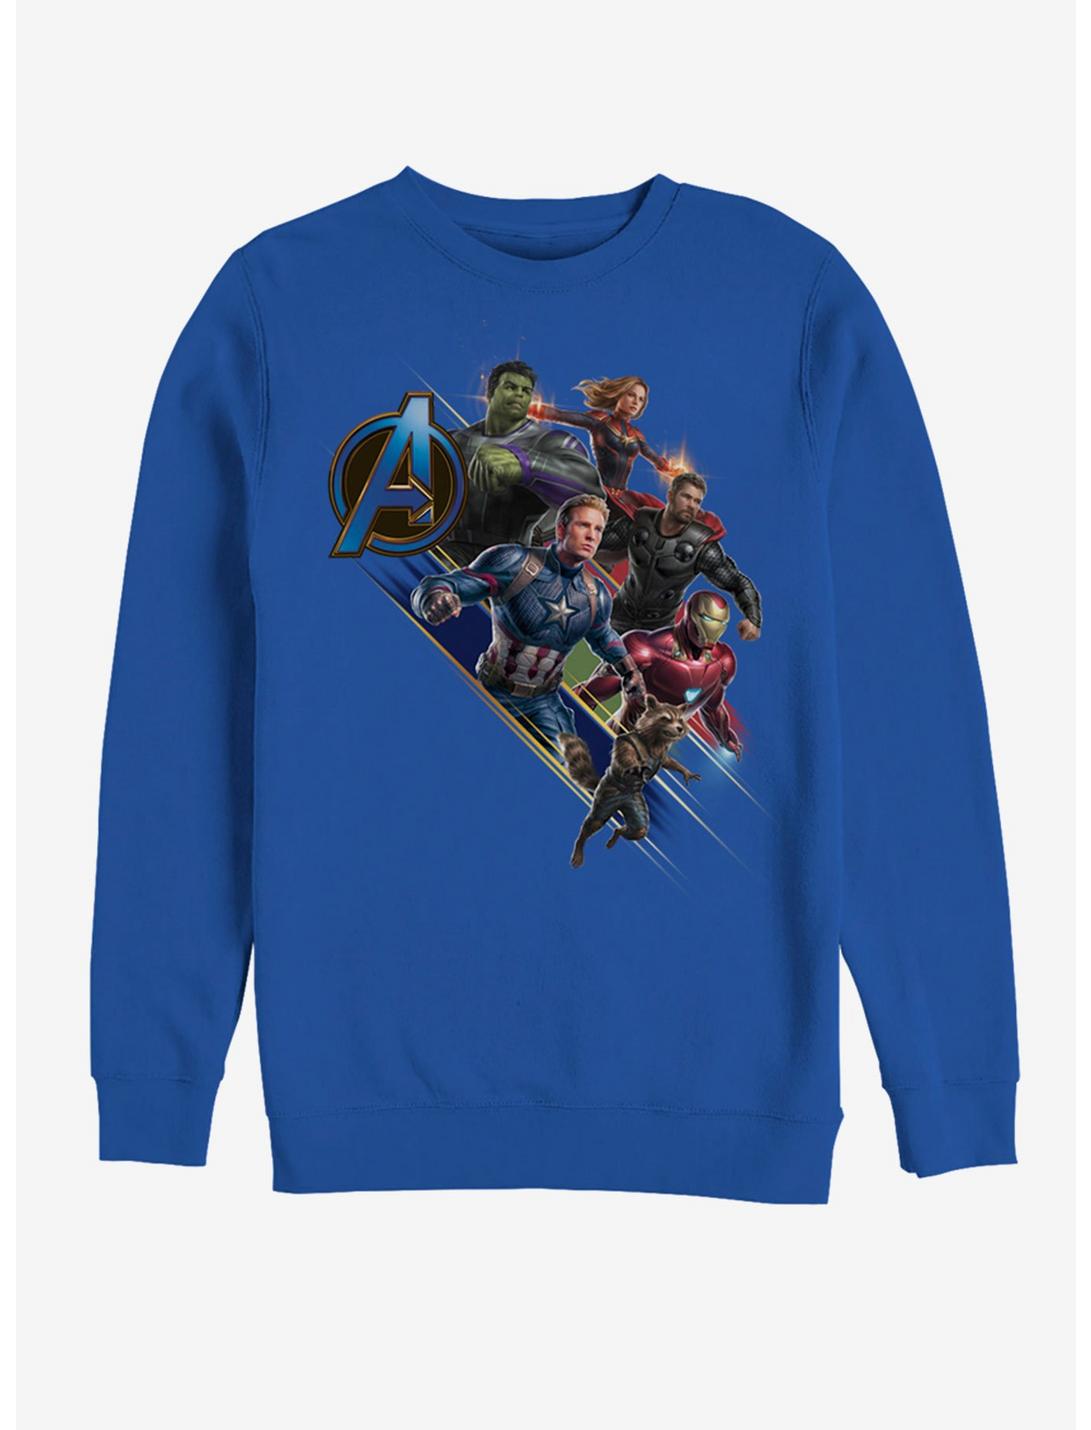 Marvel Avengers: Endgame Angled Shot Sweatshirt, ROYAL, hi-res